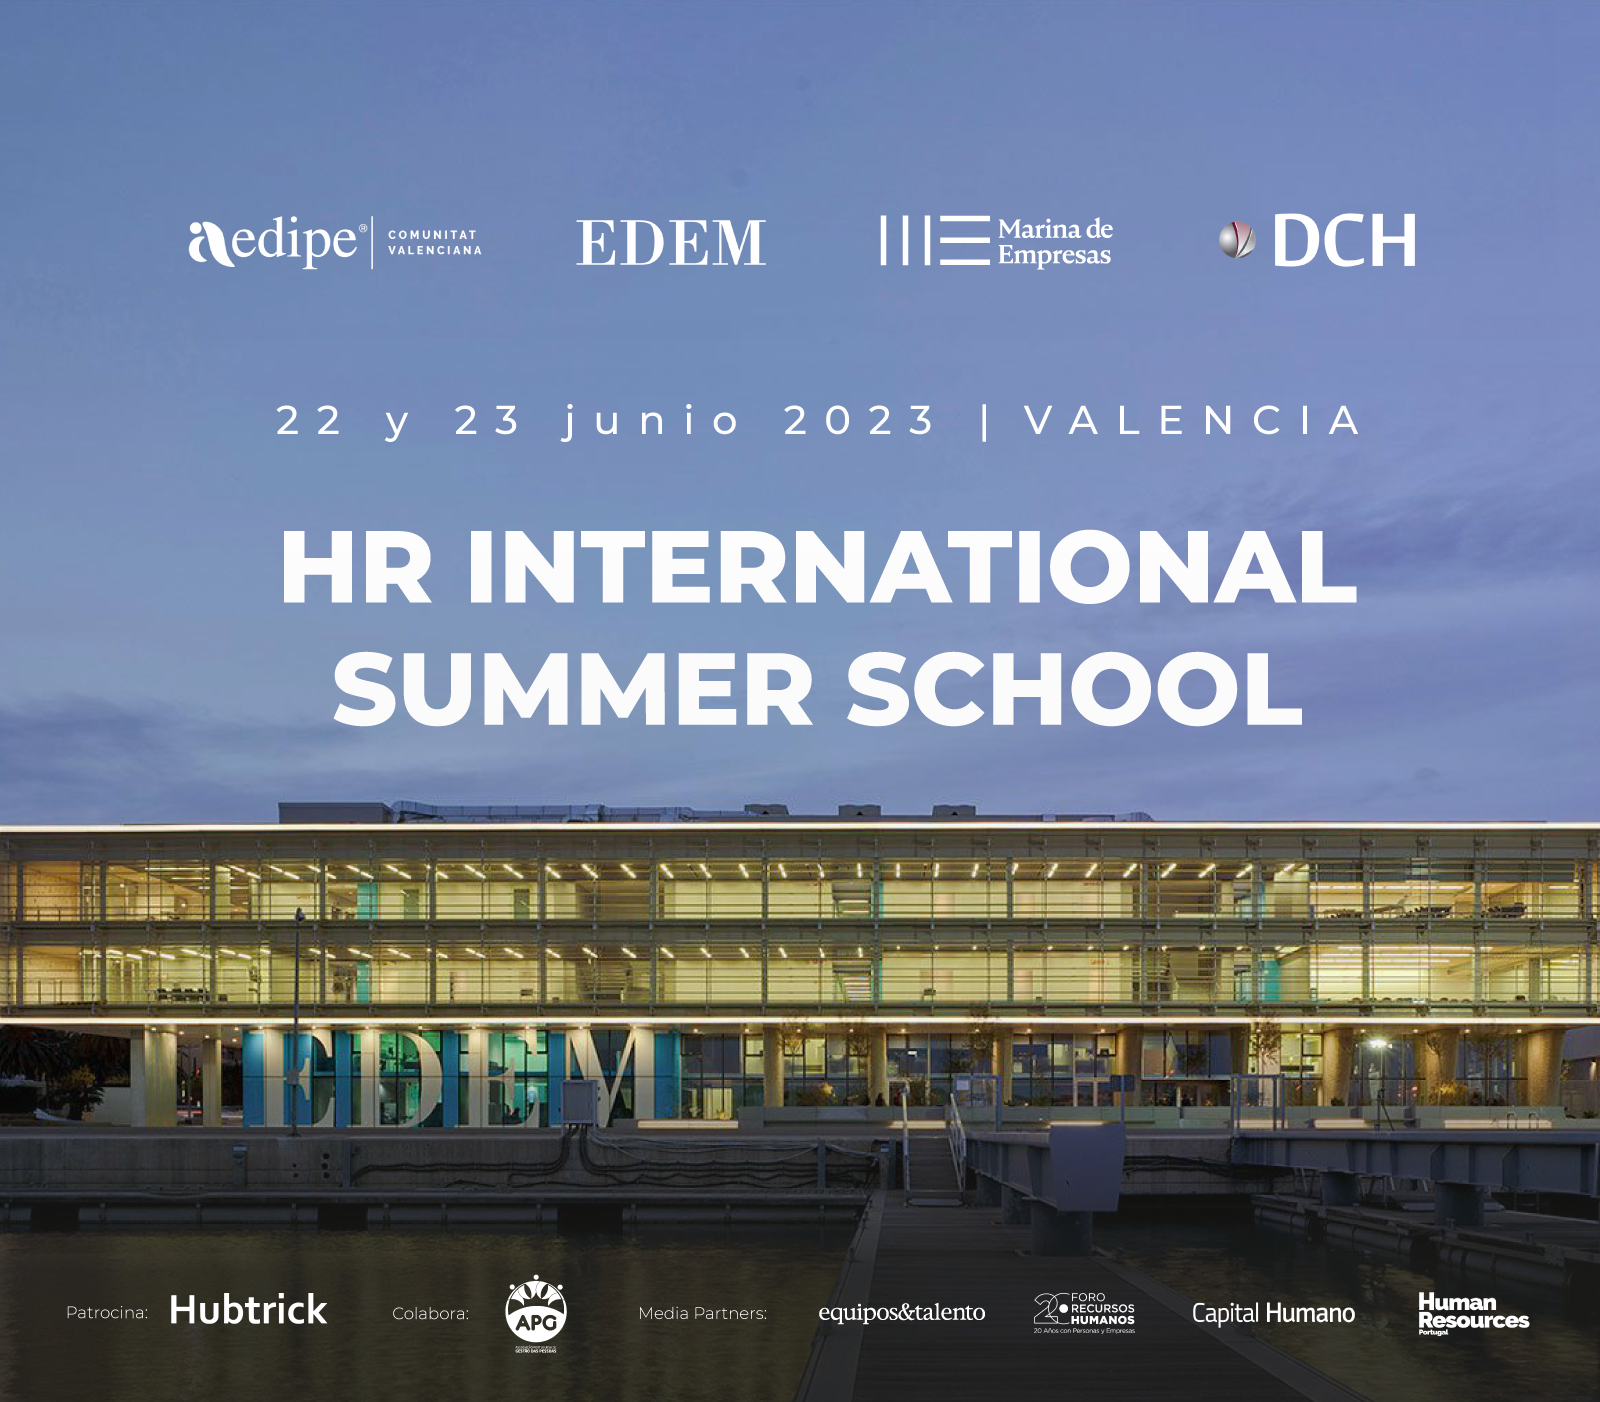 HR International Summer School